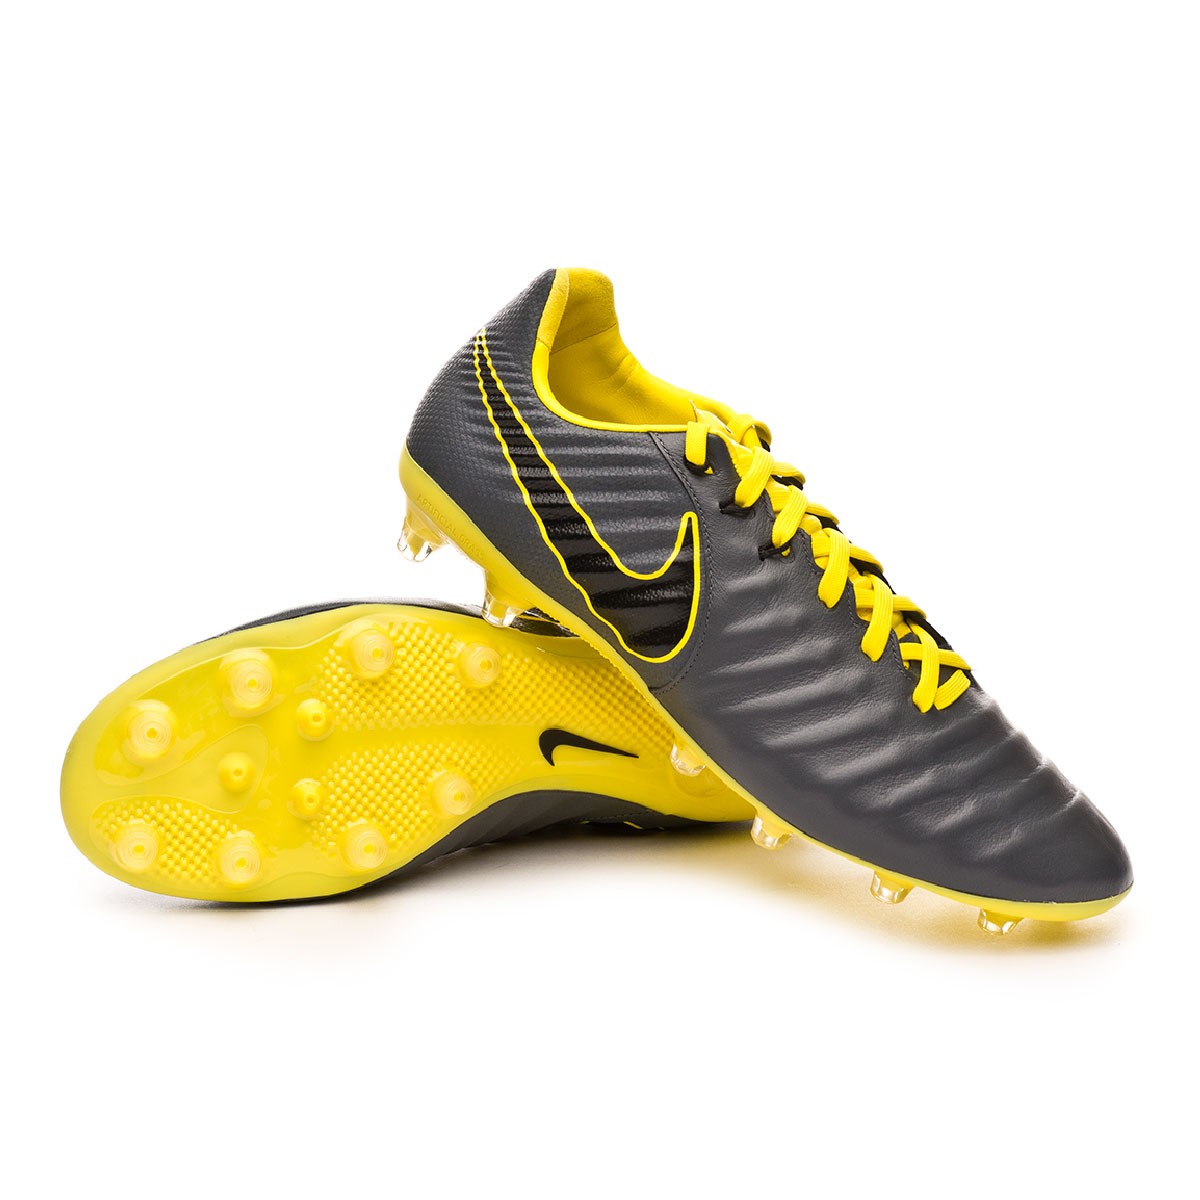 Bota de fútbol Nike Tiempo Legend VII Pro AG-Pro Dark grey-Black-Optical  yellow - Tienda de fútbol Fútbol Emotion